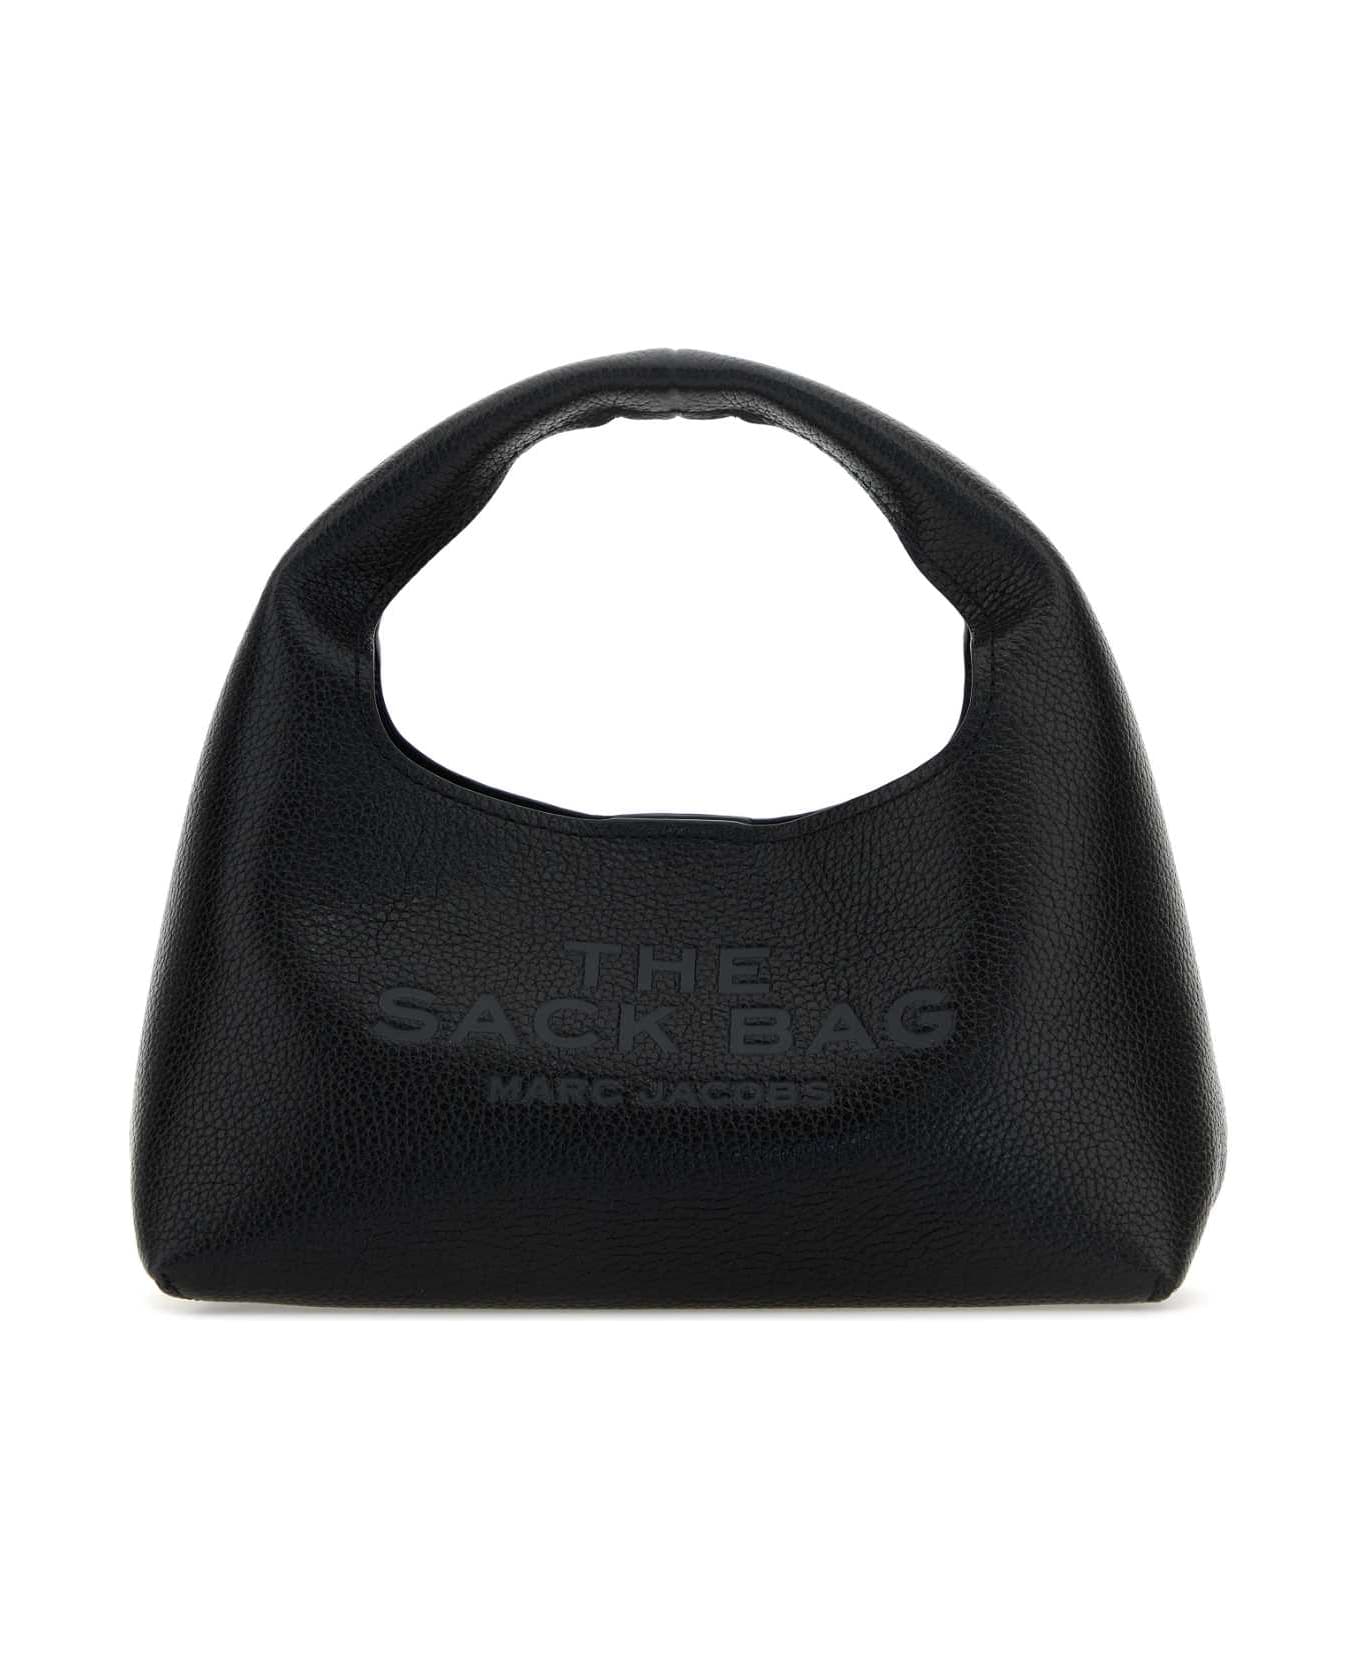 Marc Jacobs Black Leather Mini The Sack Bag Handbag - Black